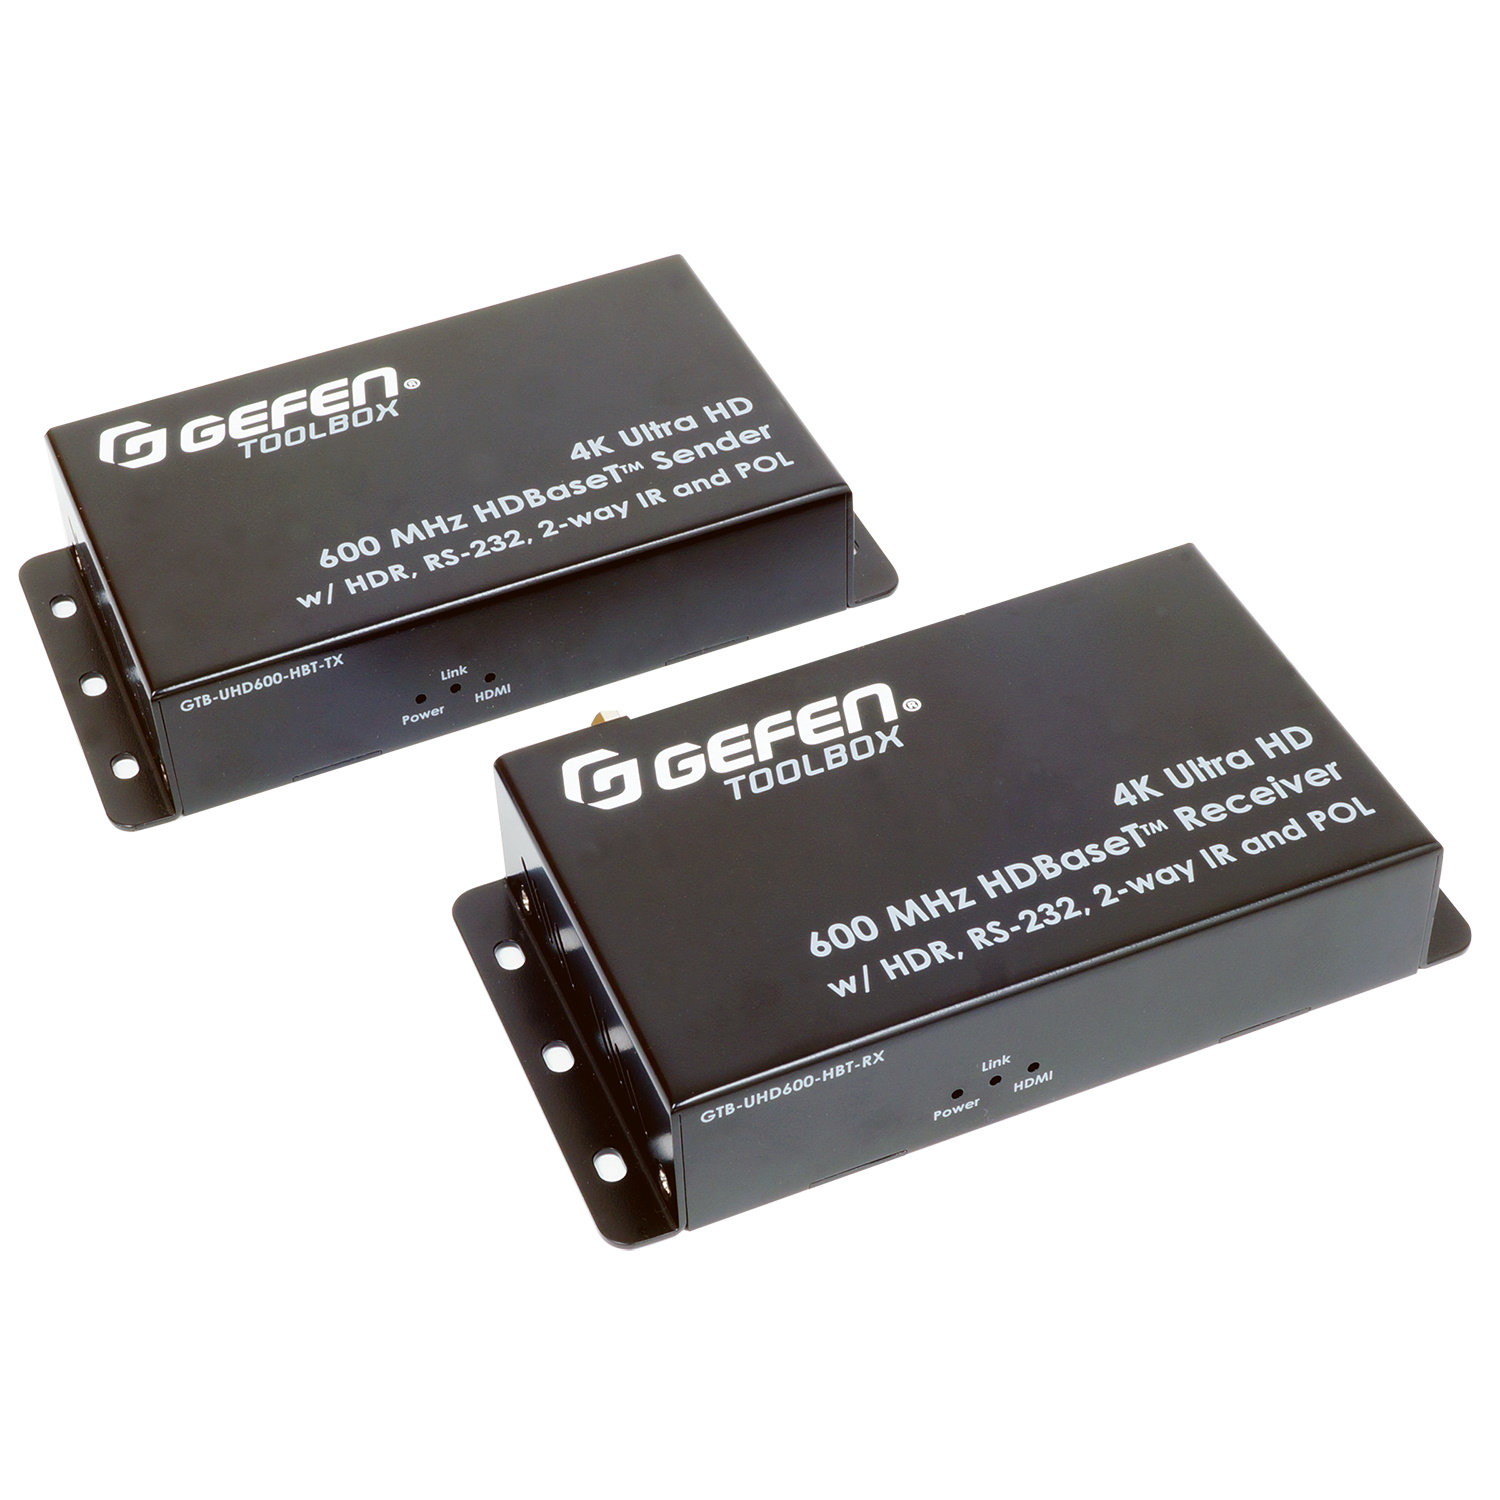 HDMI коммутаторы, разветвители, повторители Gefen GTB-UHD600-HBT hdmi коммутаторы разветвители повторители dr hd дополнительный приемник hdmi по ip dr hd ex 120 lir hd